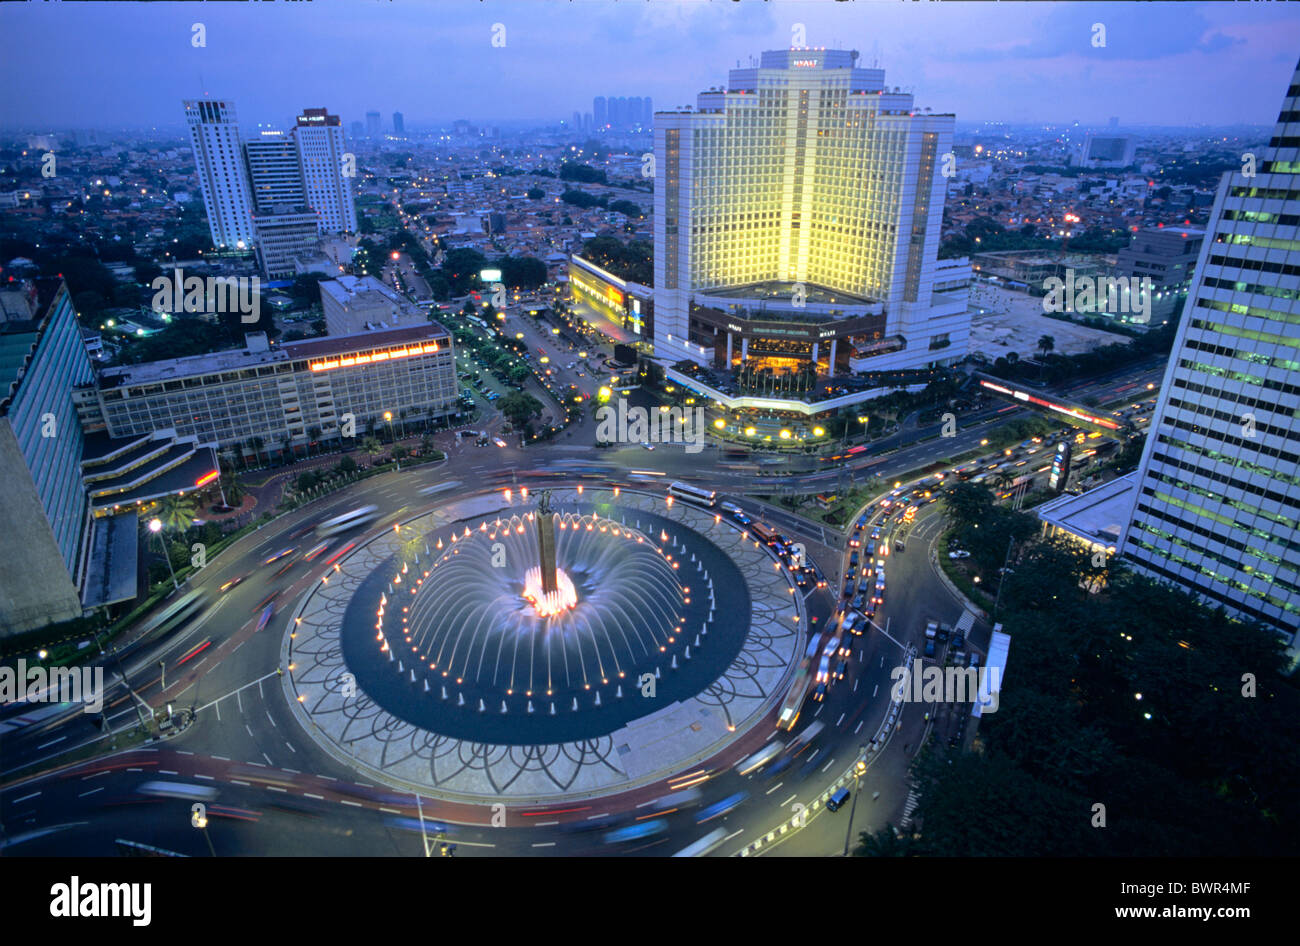 Indonesia Java island Jakarta city town Jakarta nocturnal view at Stock